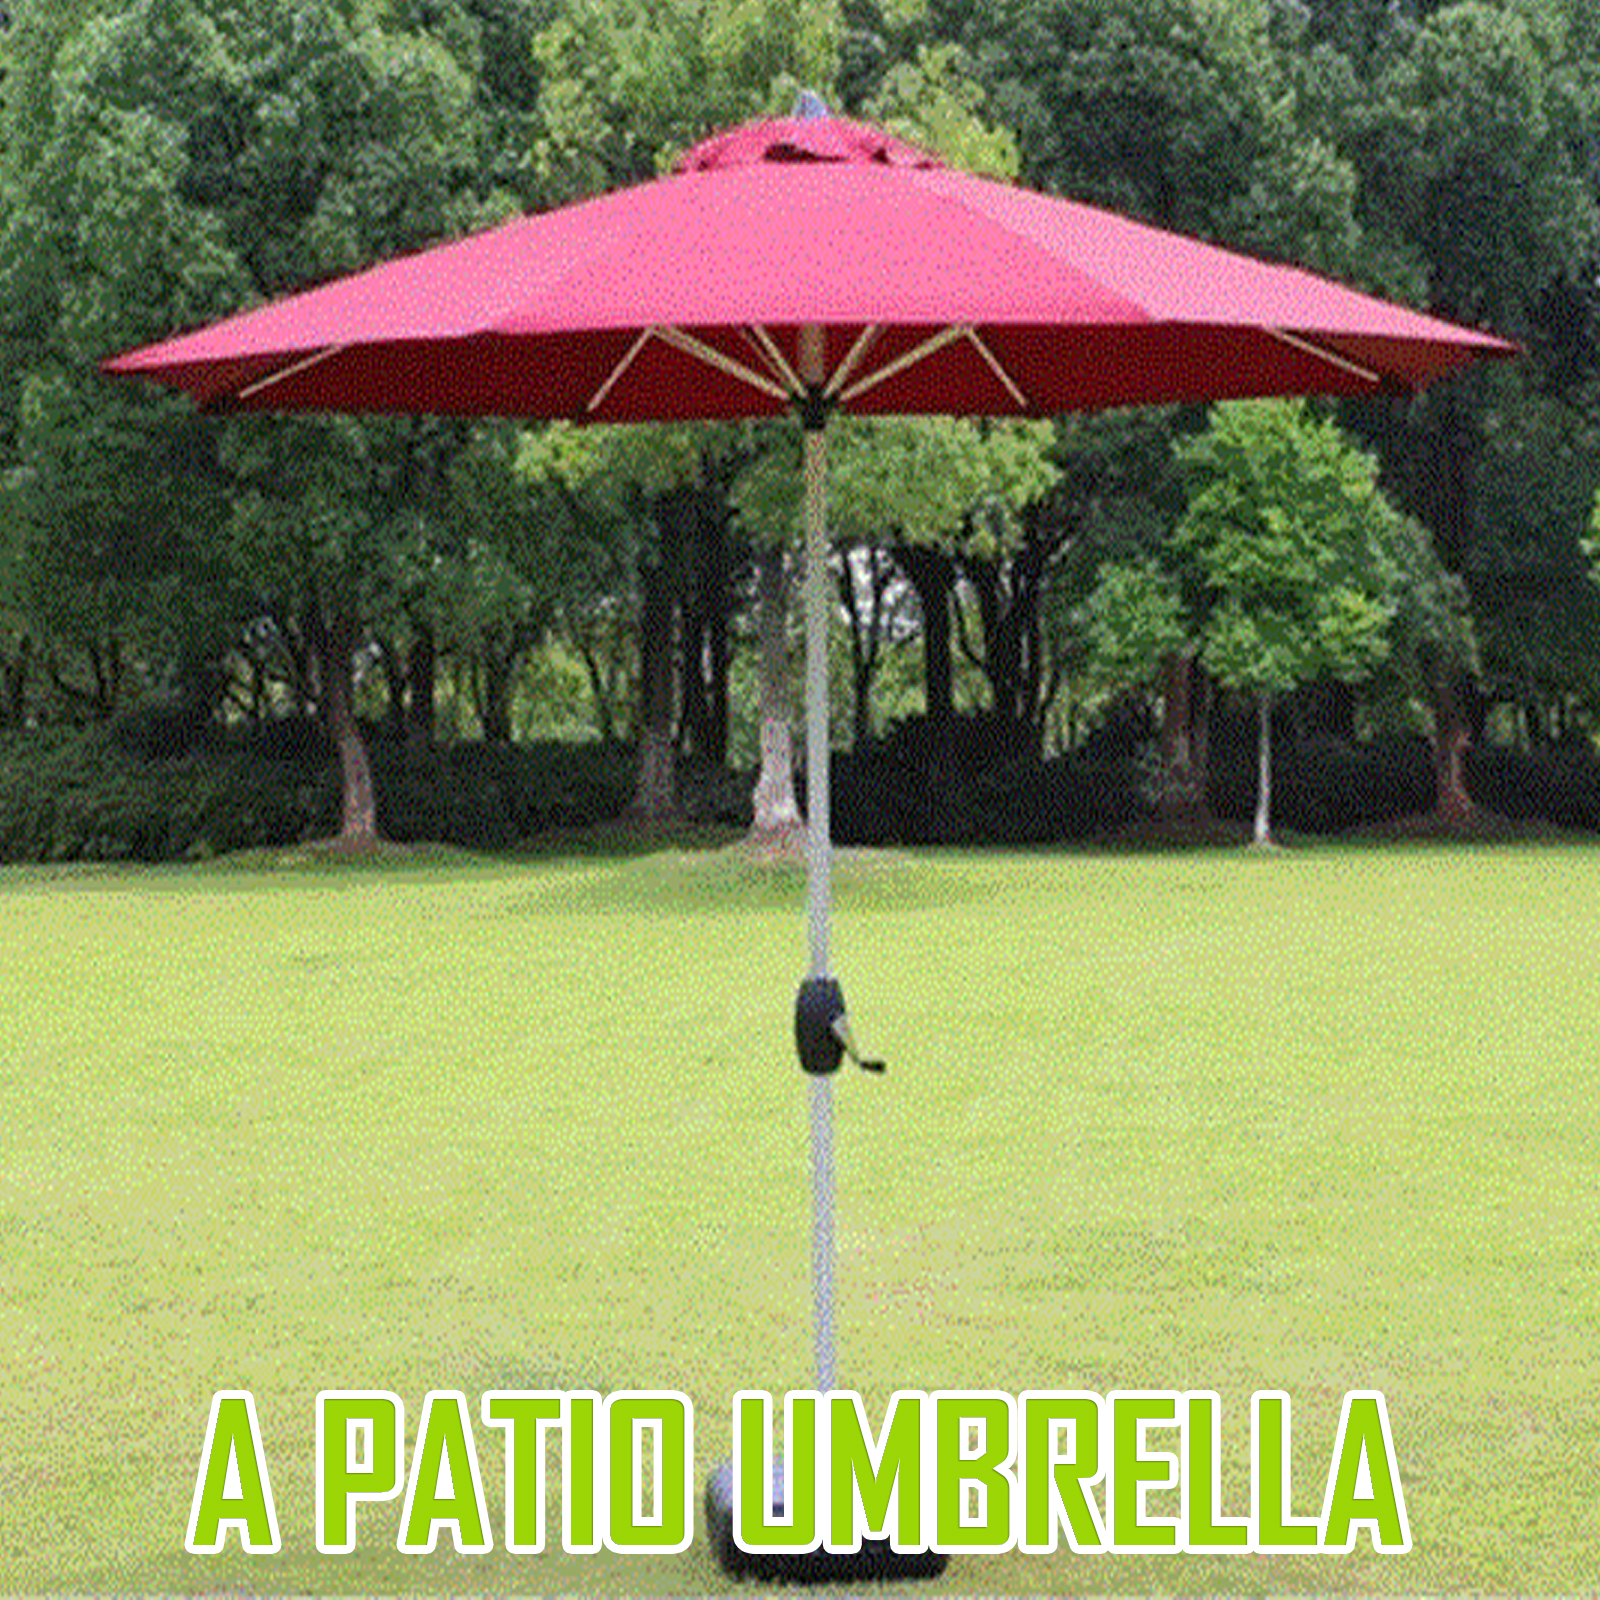 A patio umbrella